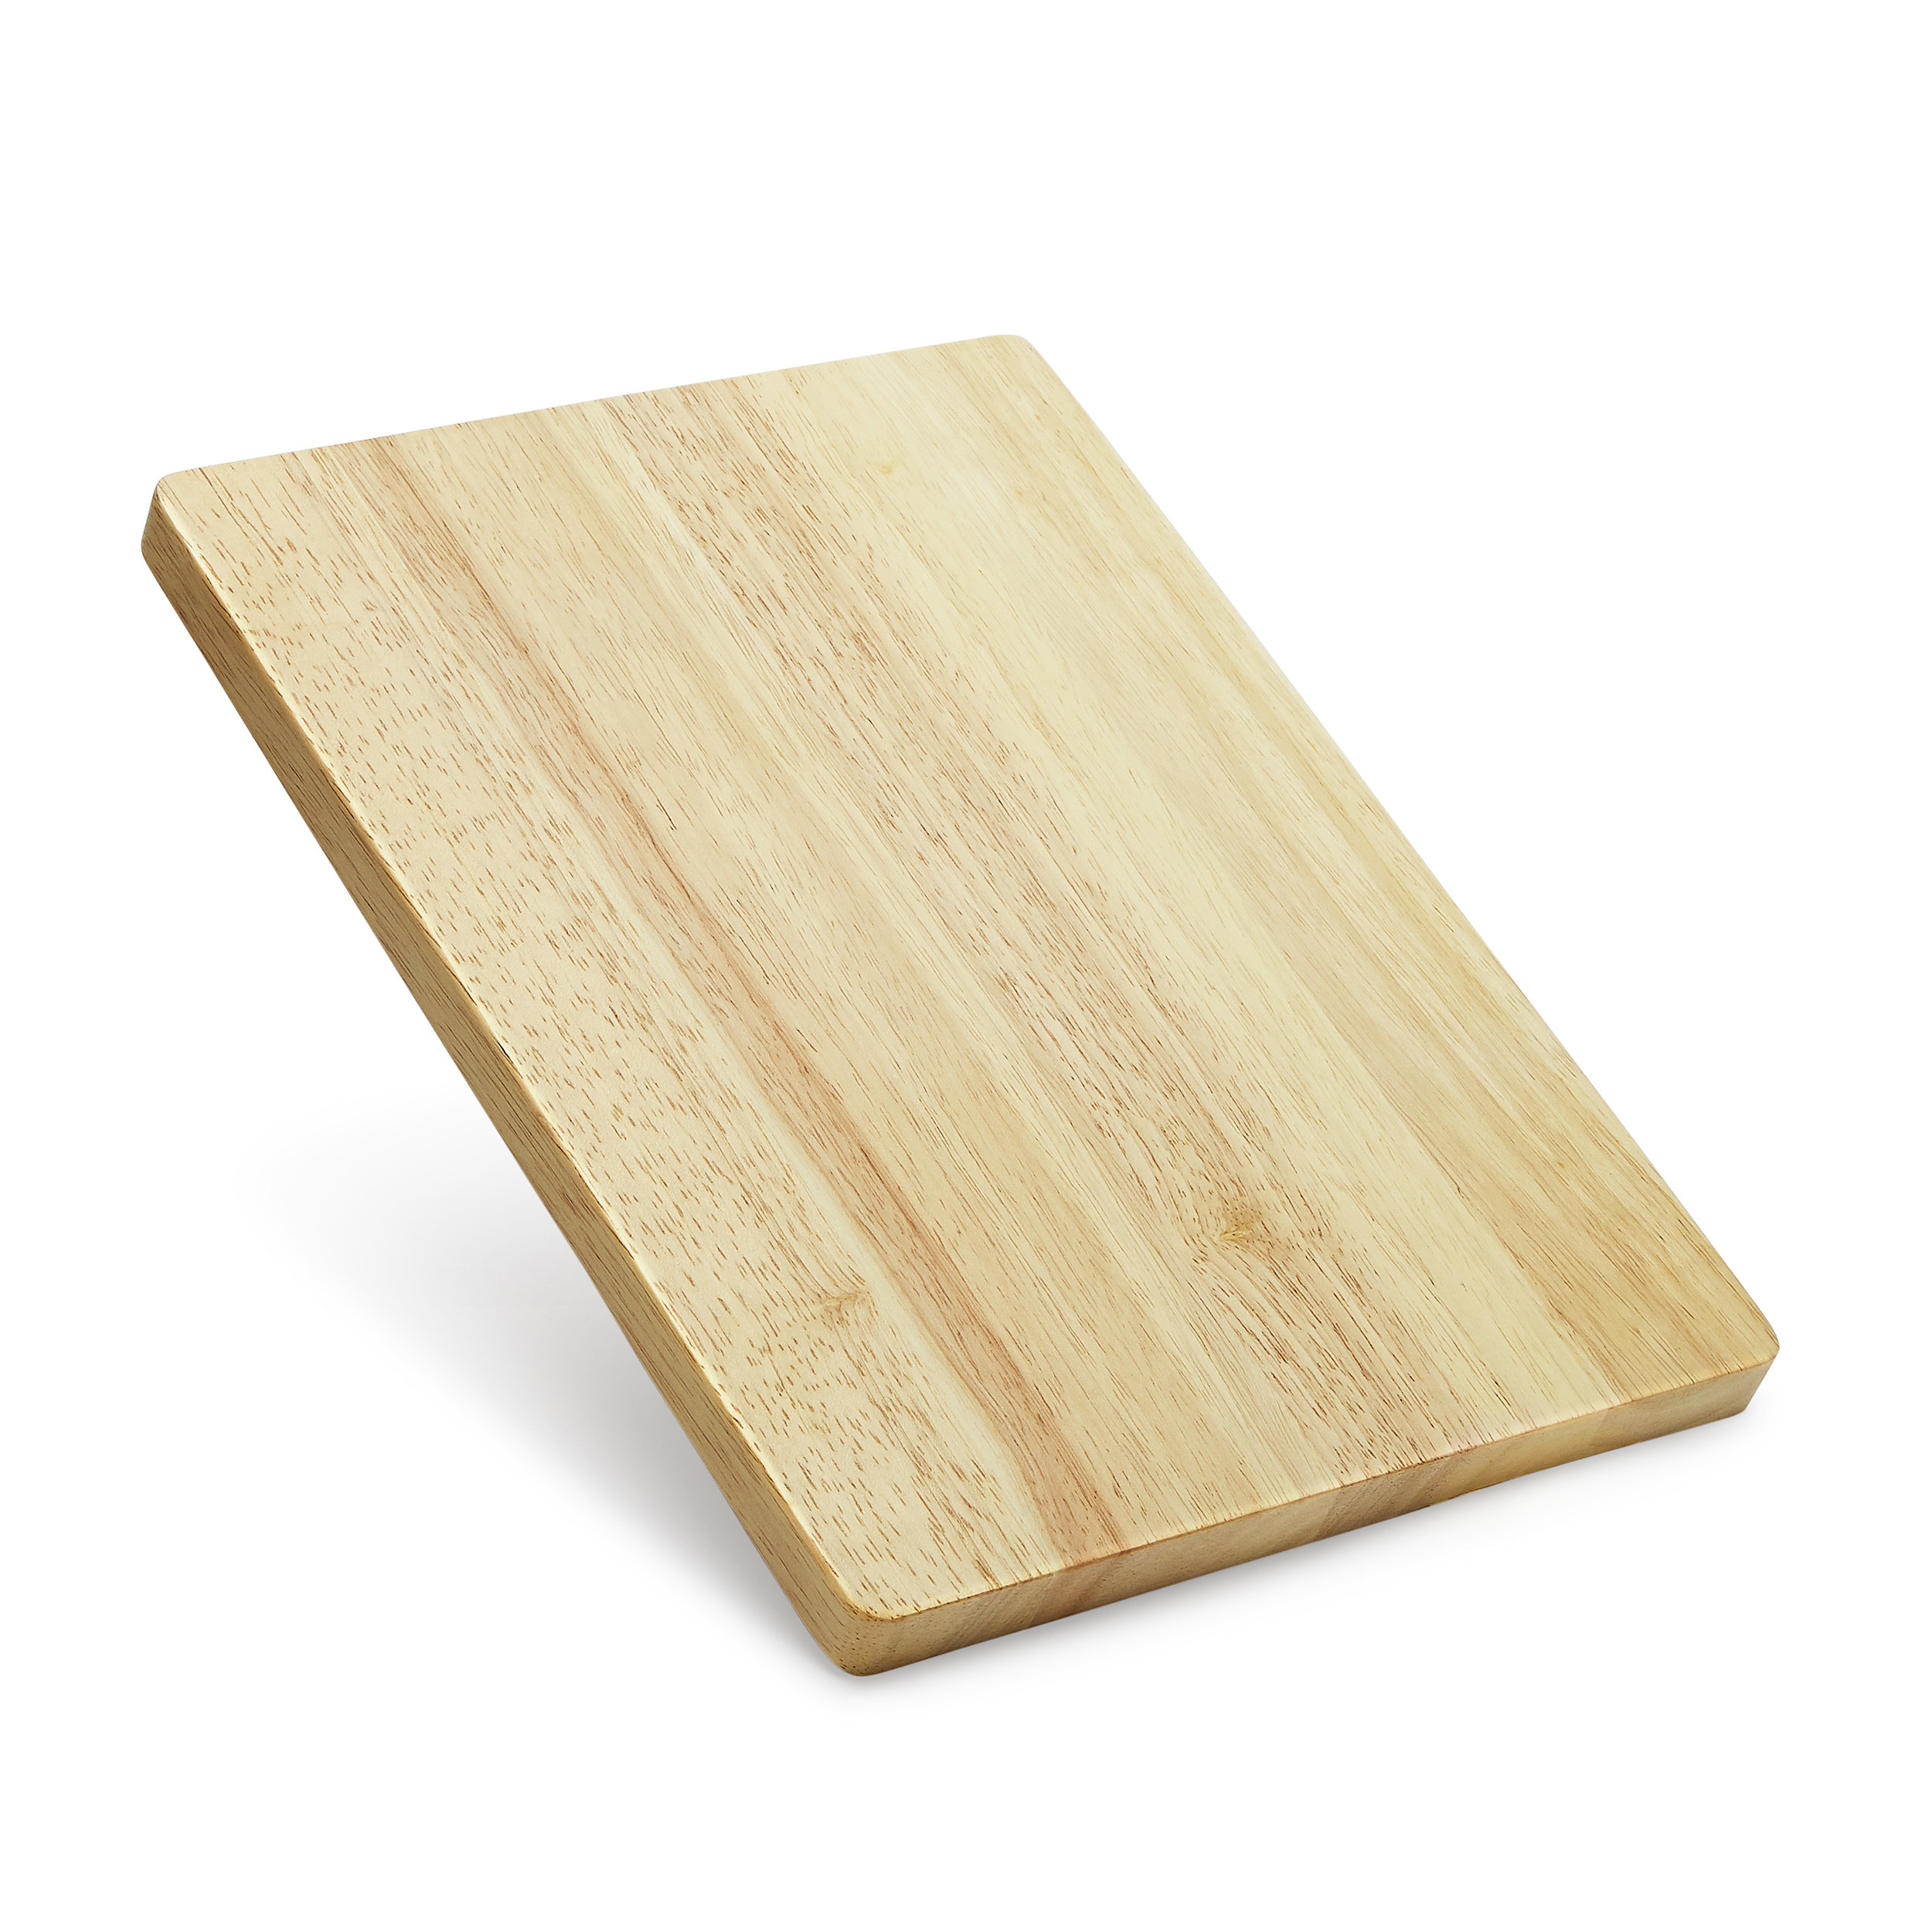 Handmade Edge Grain Wood Cutting Board, 1.25 Inches Thick